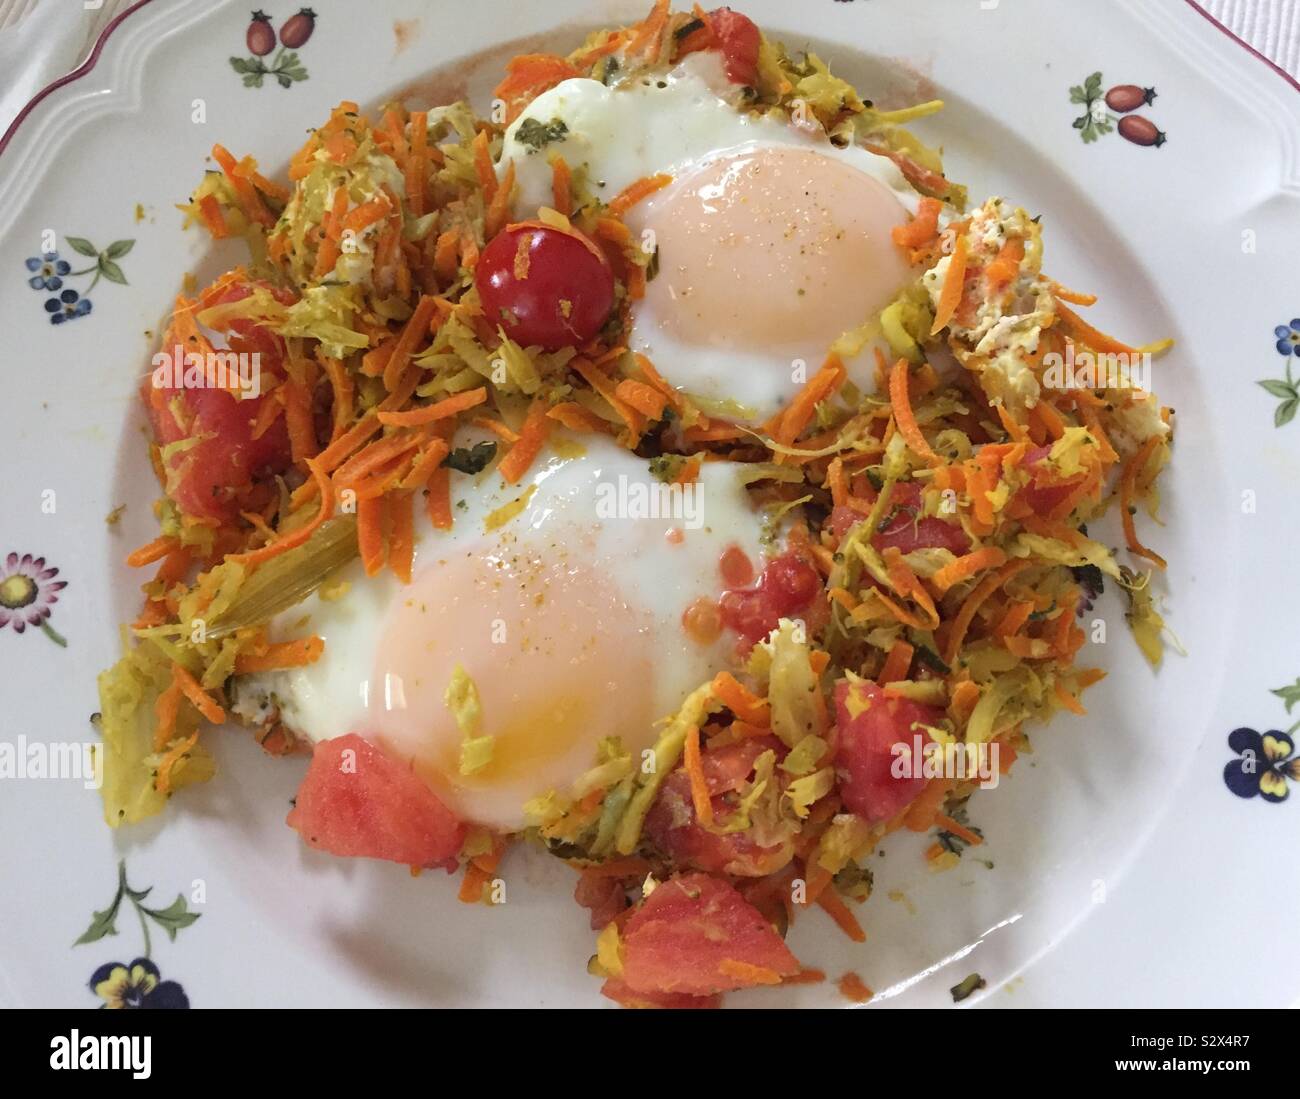 Poached eggs over shredded veggies Stock Photo